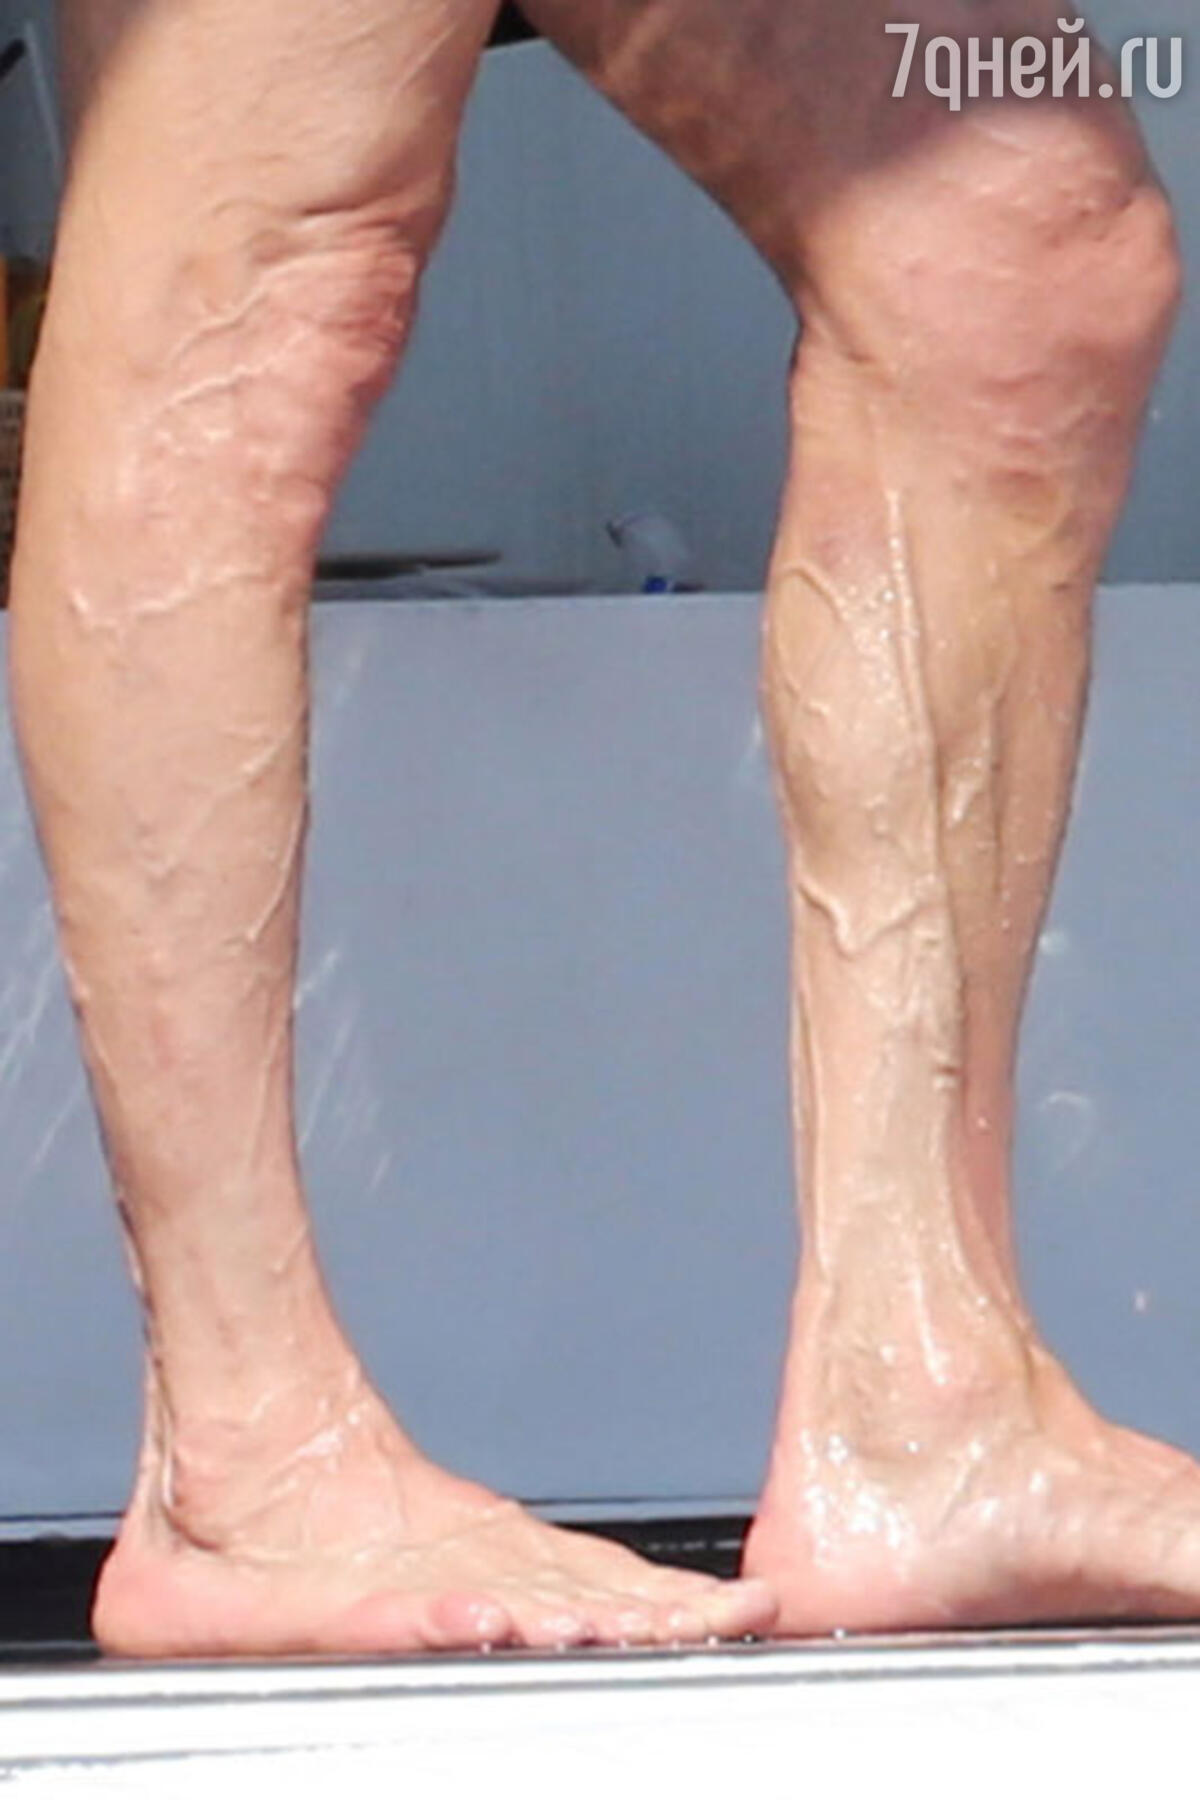 Ступни ножки раздетой девки киска пальчики ног (66 фото)